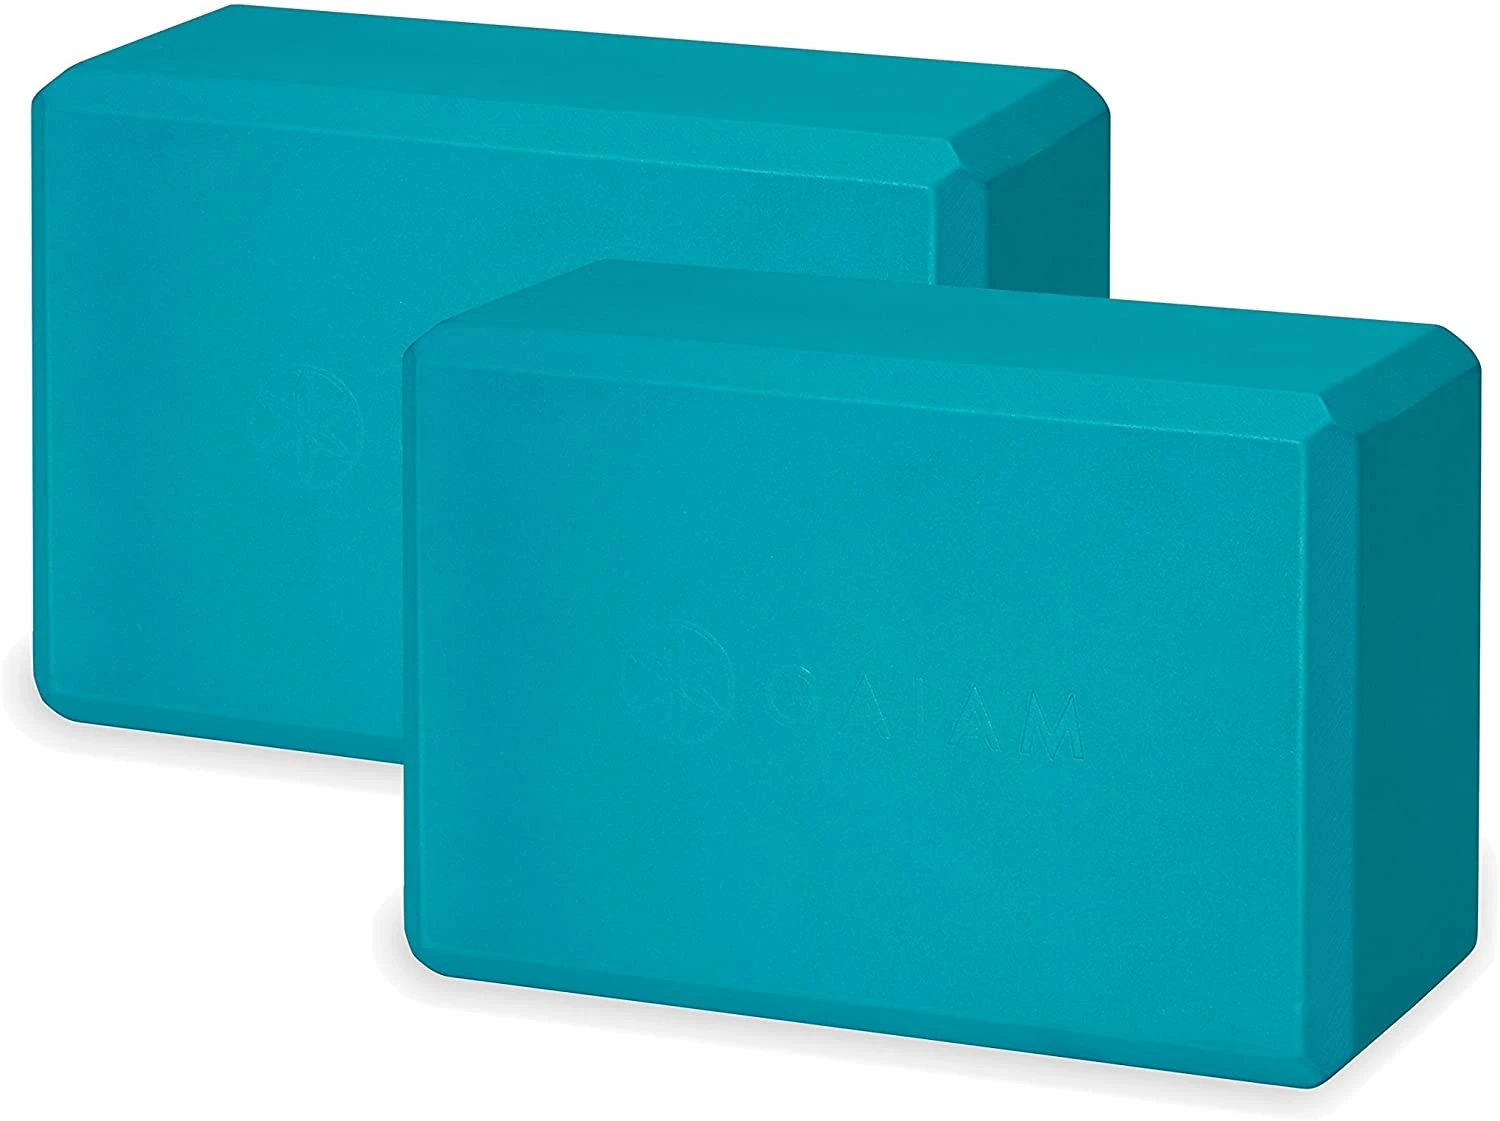 High-Density EVA Foam Yoga Block Soft Non-Slip Yoga Block Light Weight and Non-Slip Surface